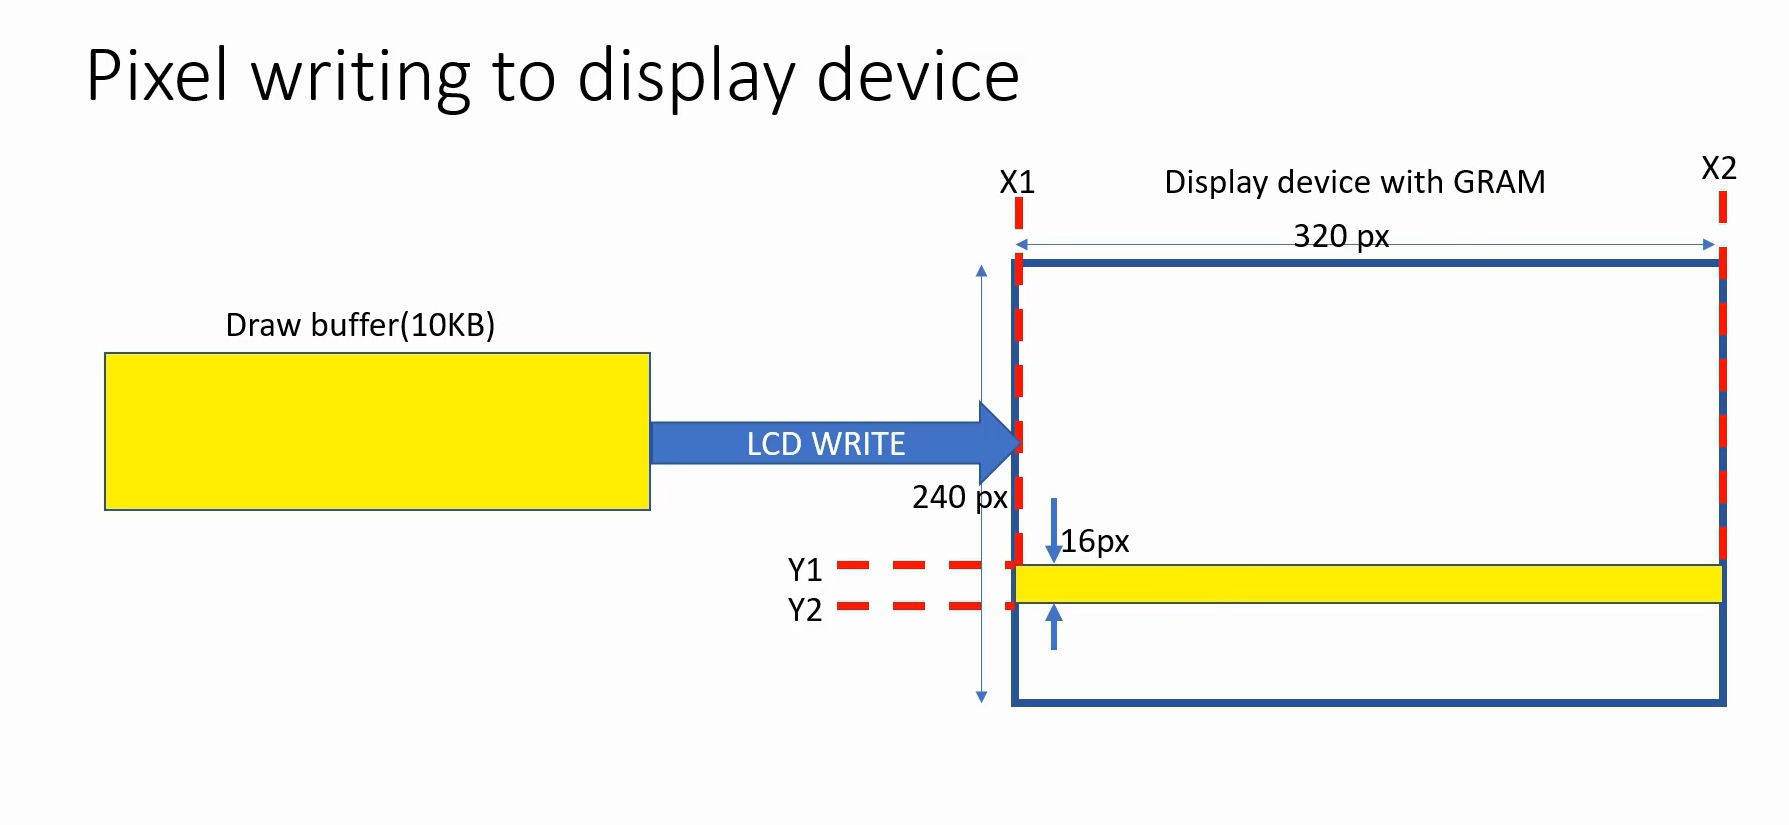 Figure 3. Pixel writing to display device